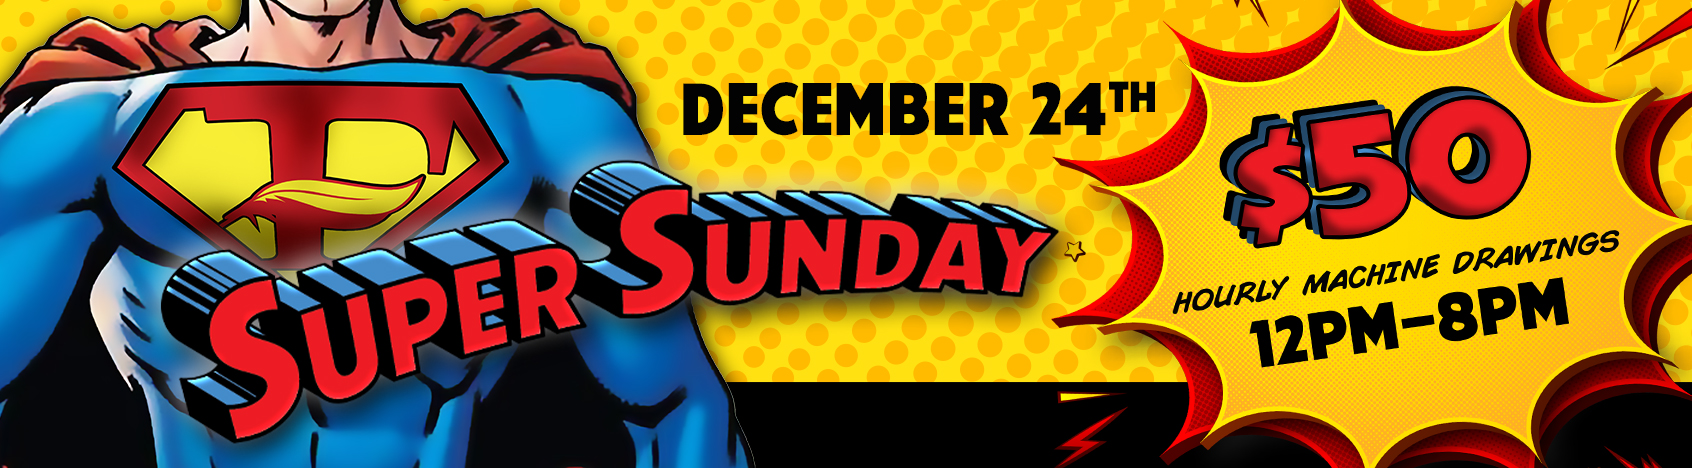 Super Sunday December 24